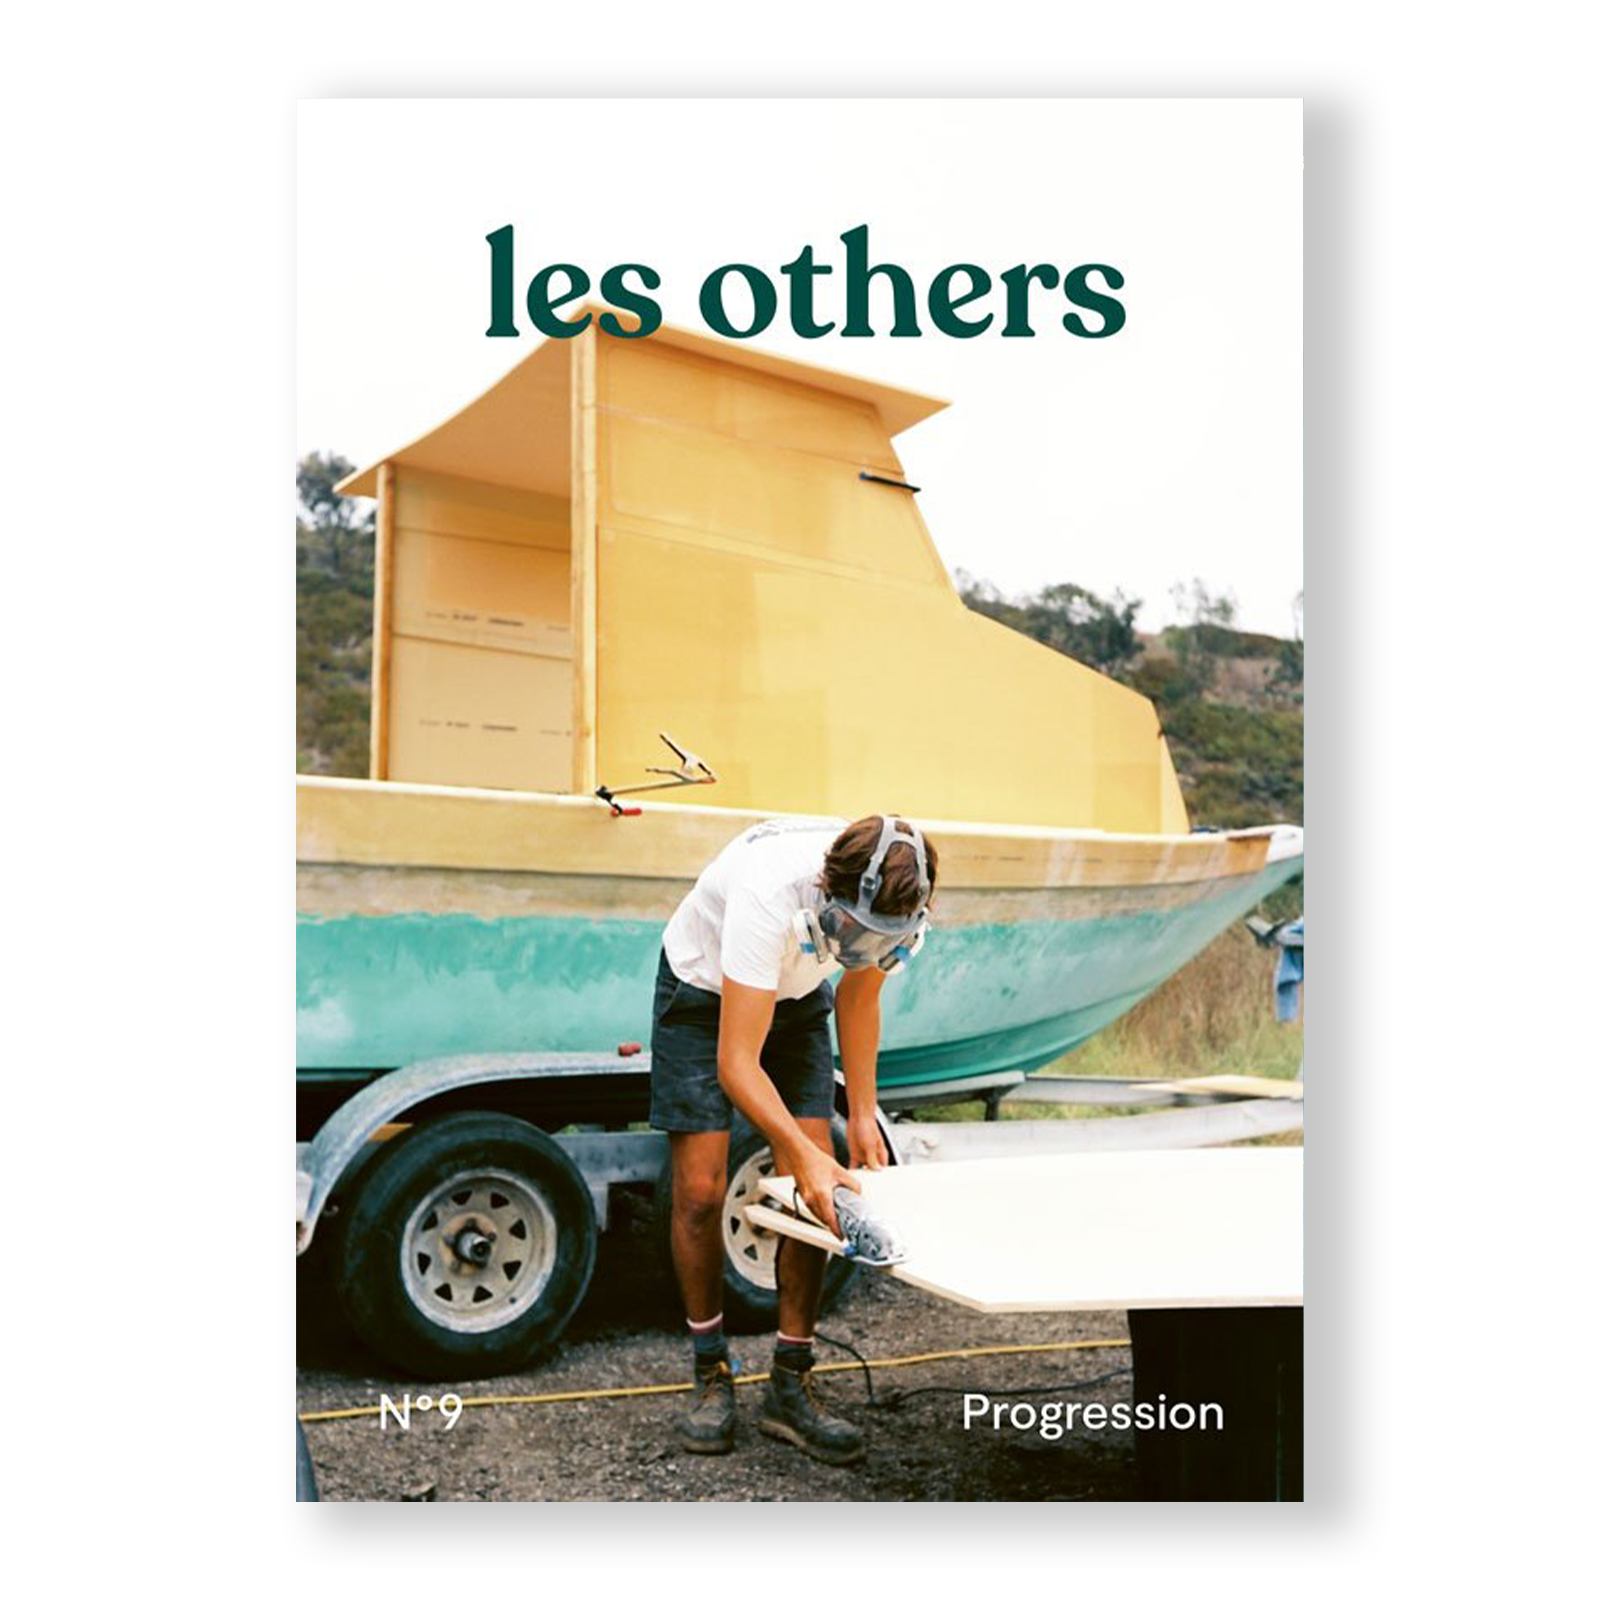 les others - Progression (volume 9)